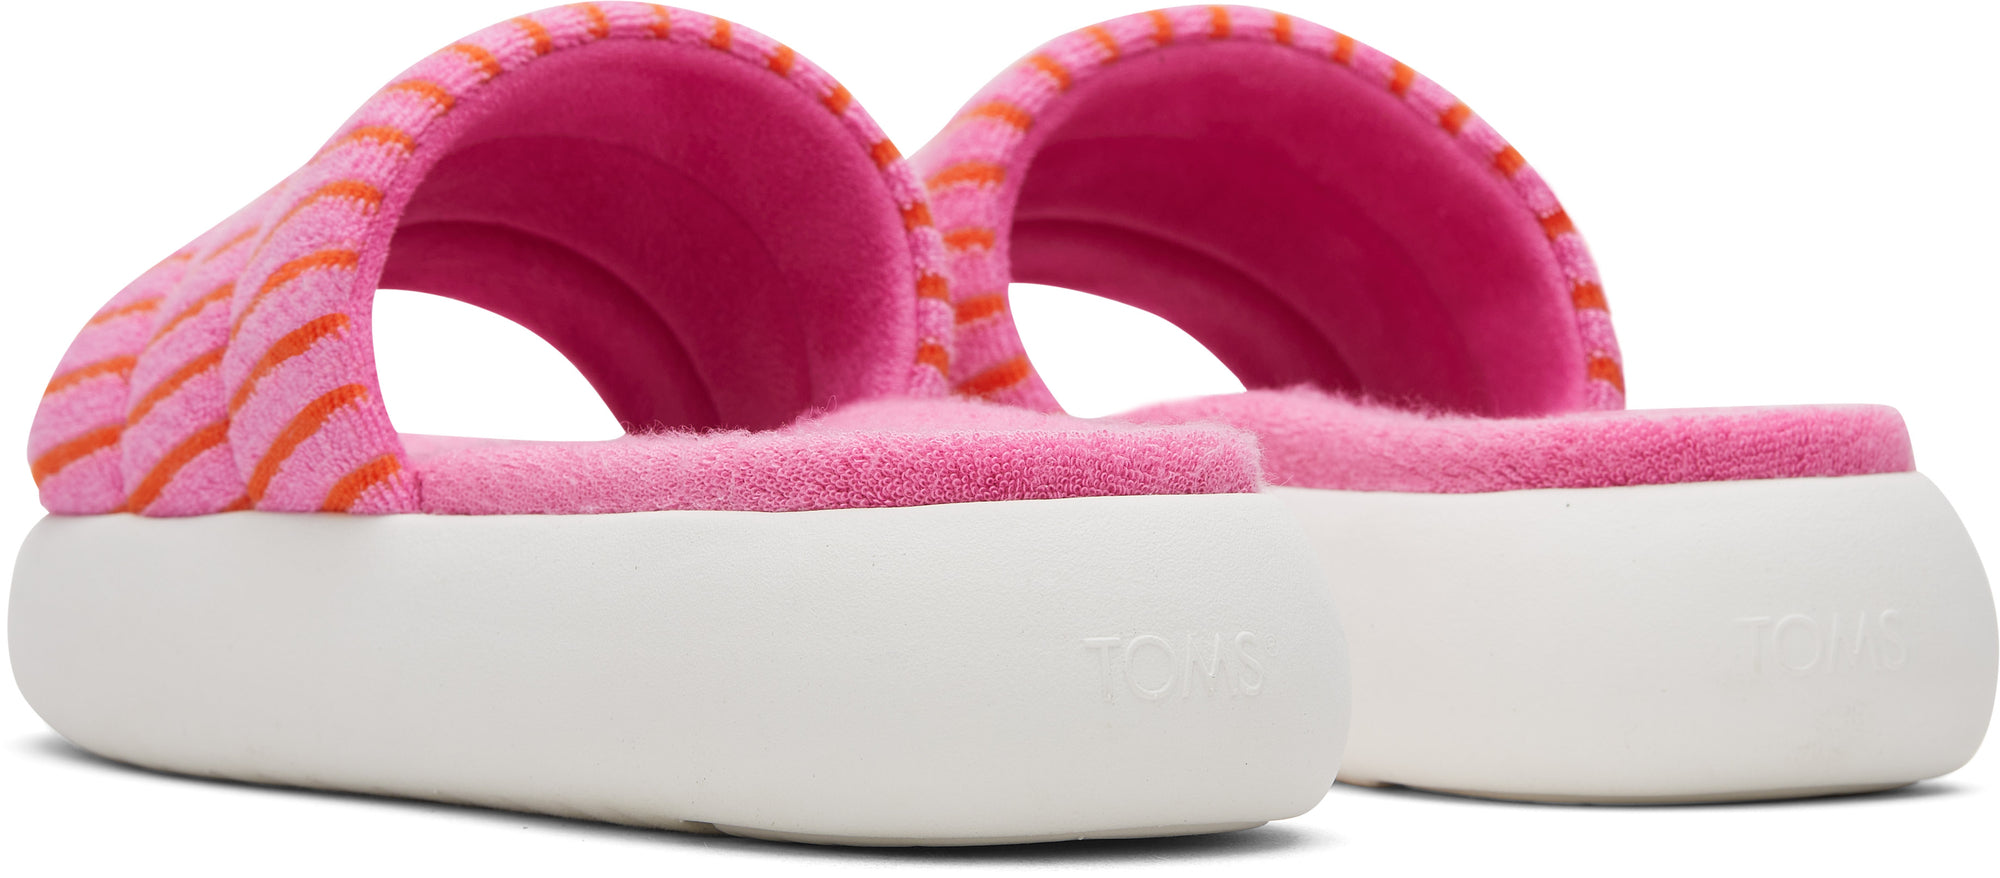 Dámské růžové pantofle TOMS Mallow Slide